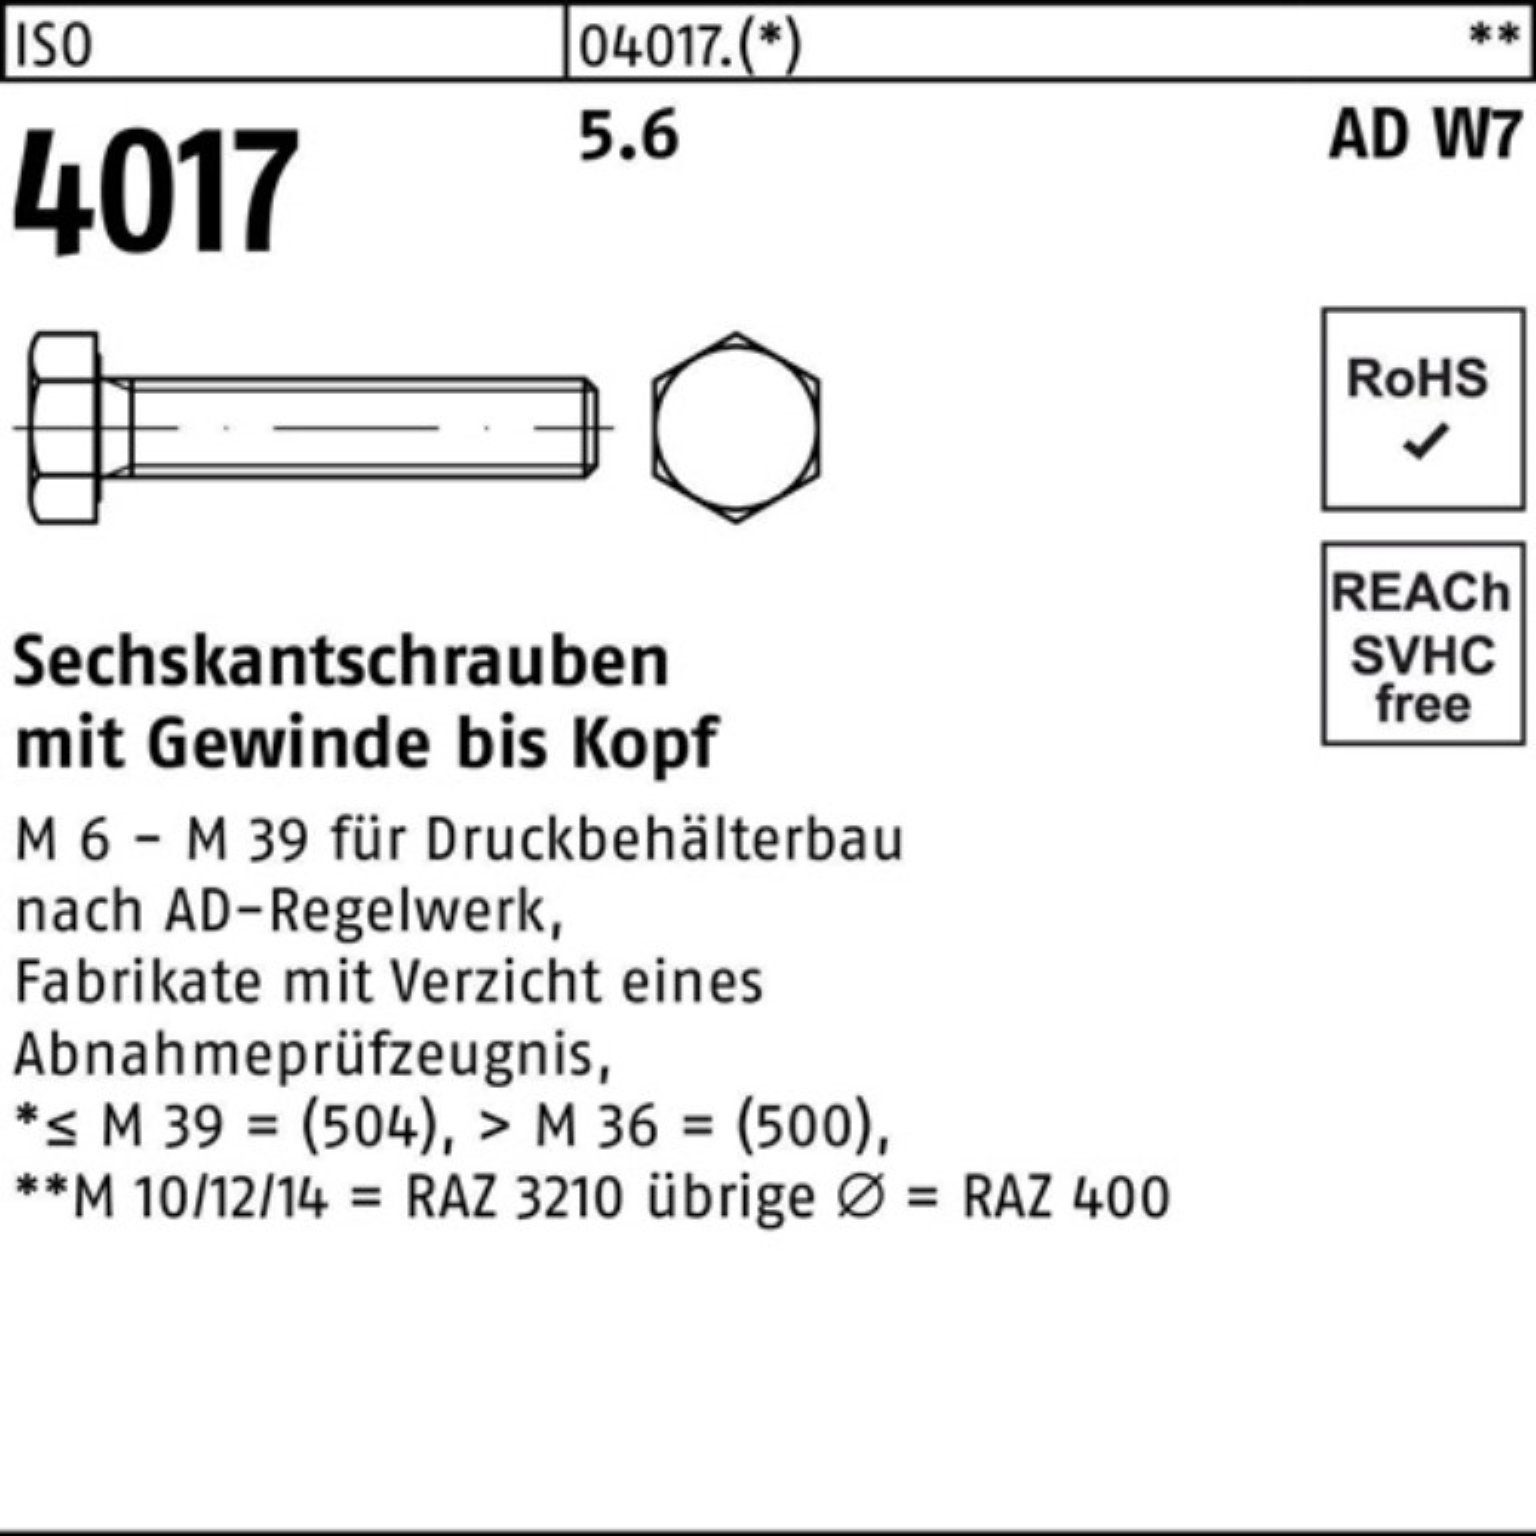 Bufab Sechskantschraube 100er Pack Sechskantschraube ISO 4017 VG M14x 50 5.6 AD W7 100 Stück